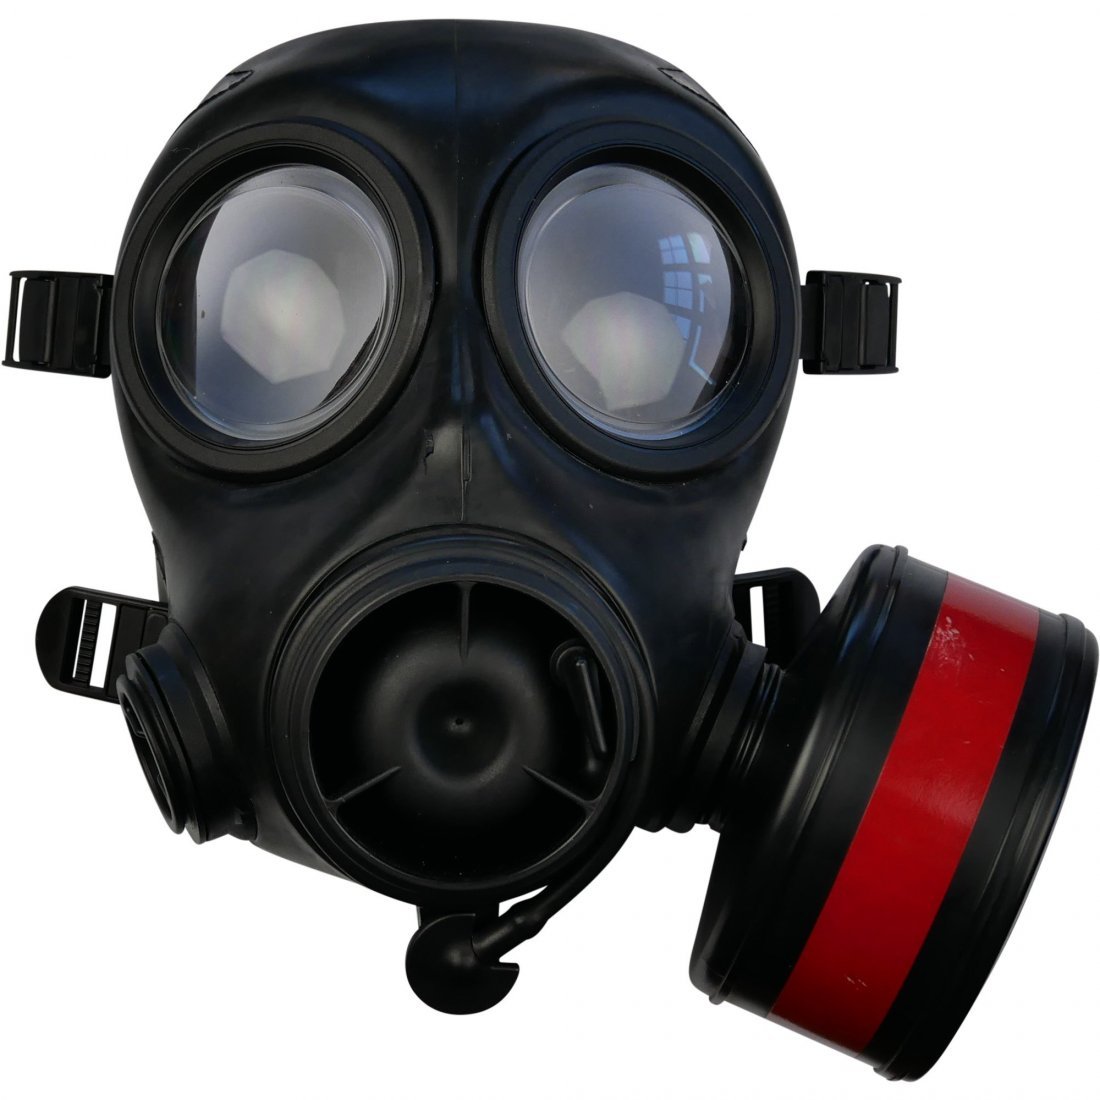 avon s10 gas mask manual